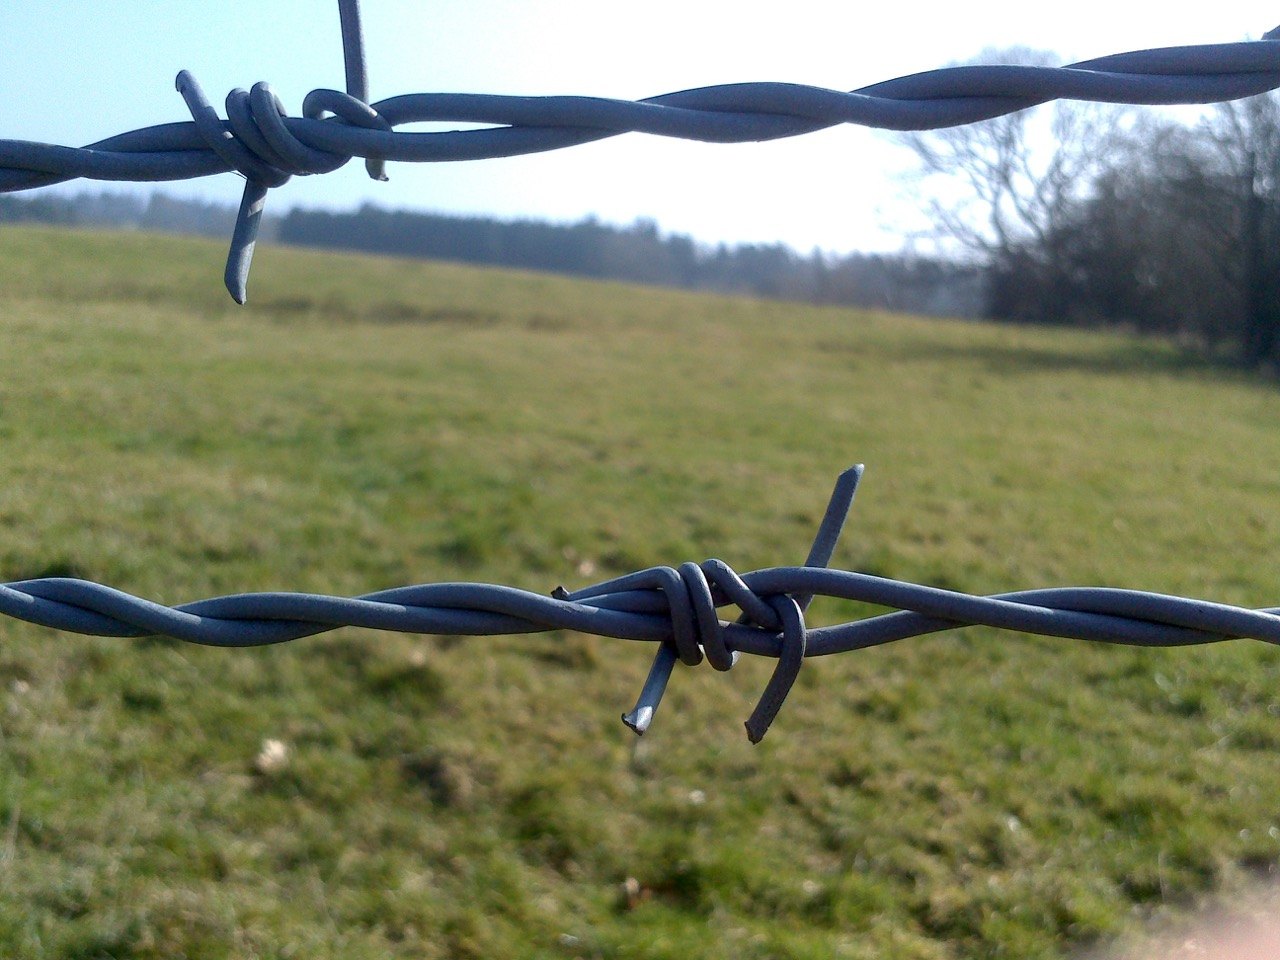 Crossing fields - beware of barbed wire